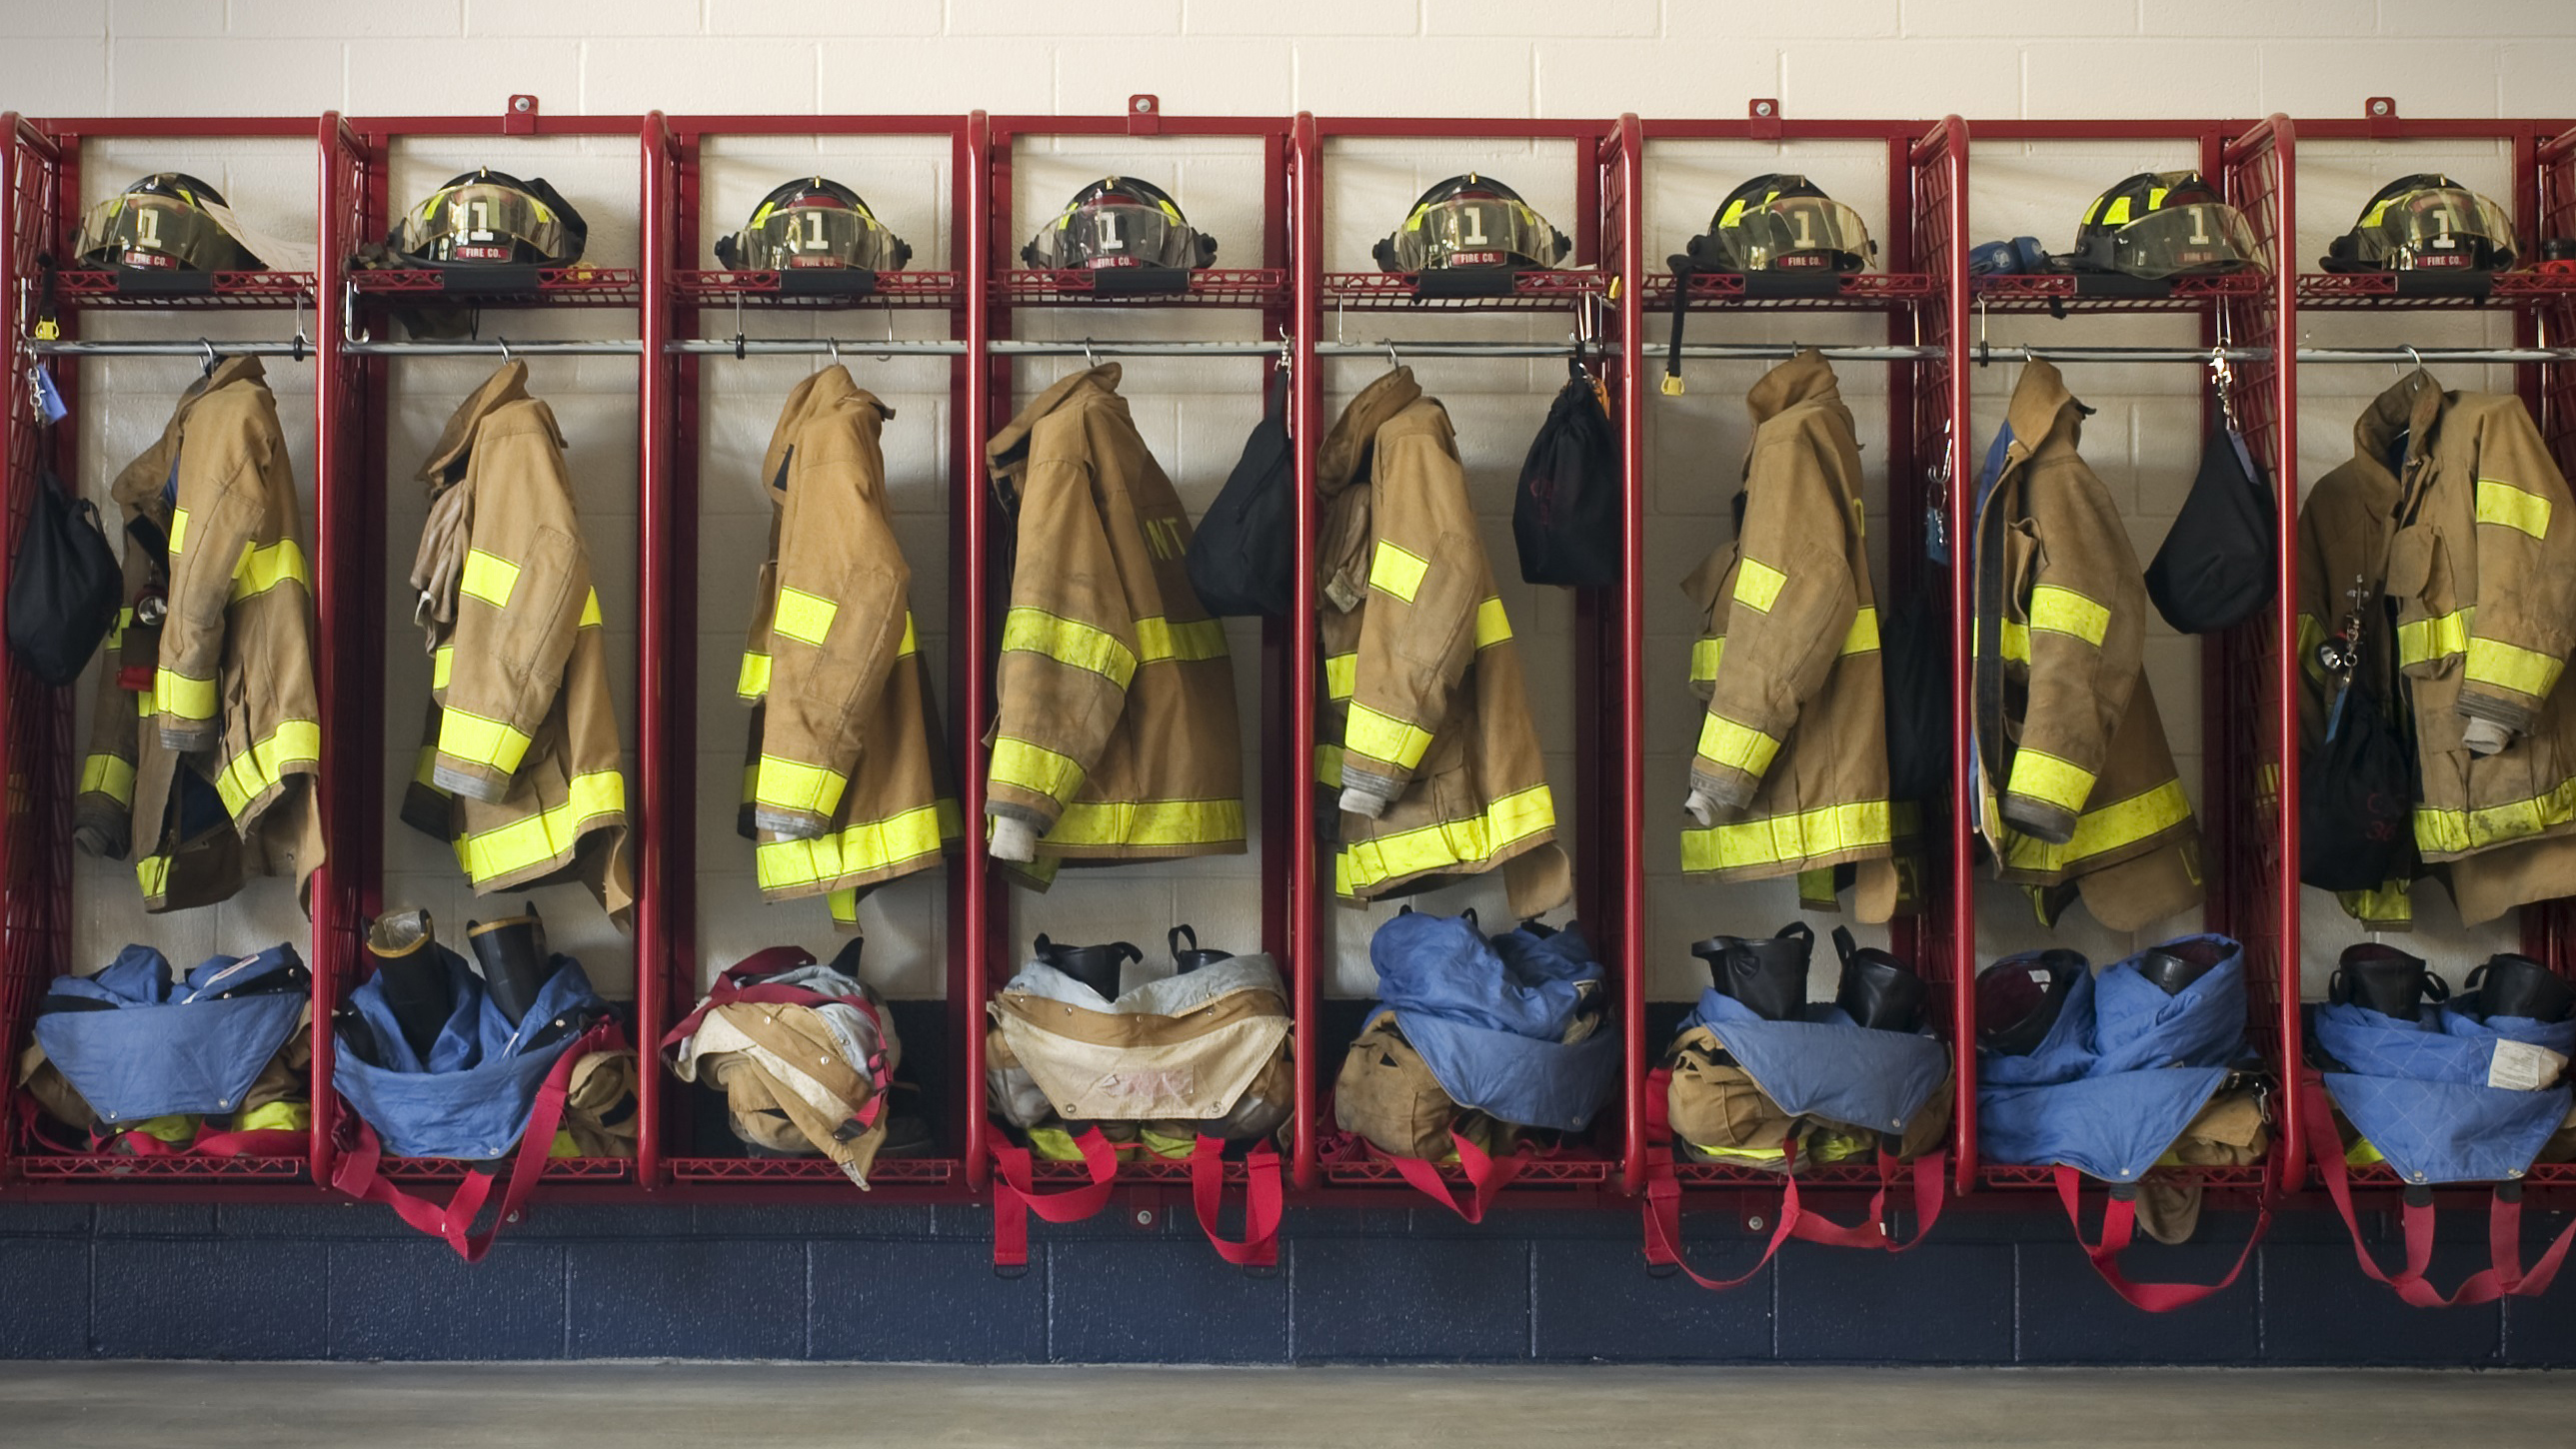 Fire uniforms hanging in lockers